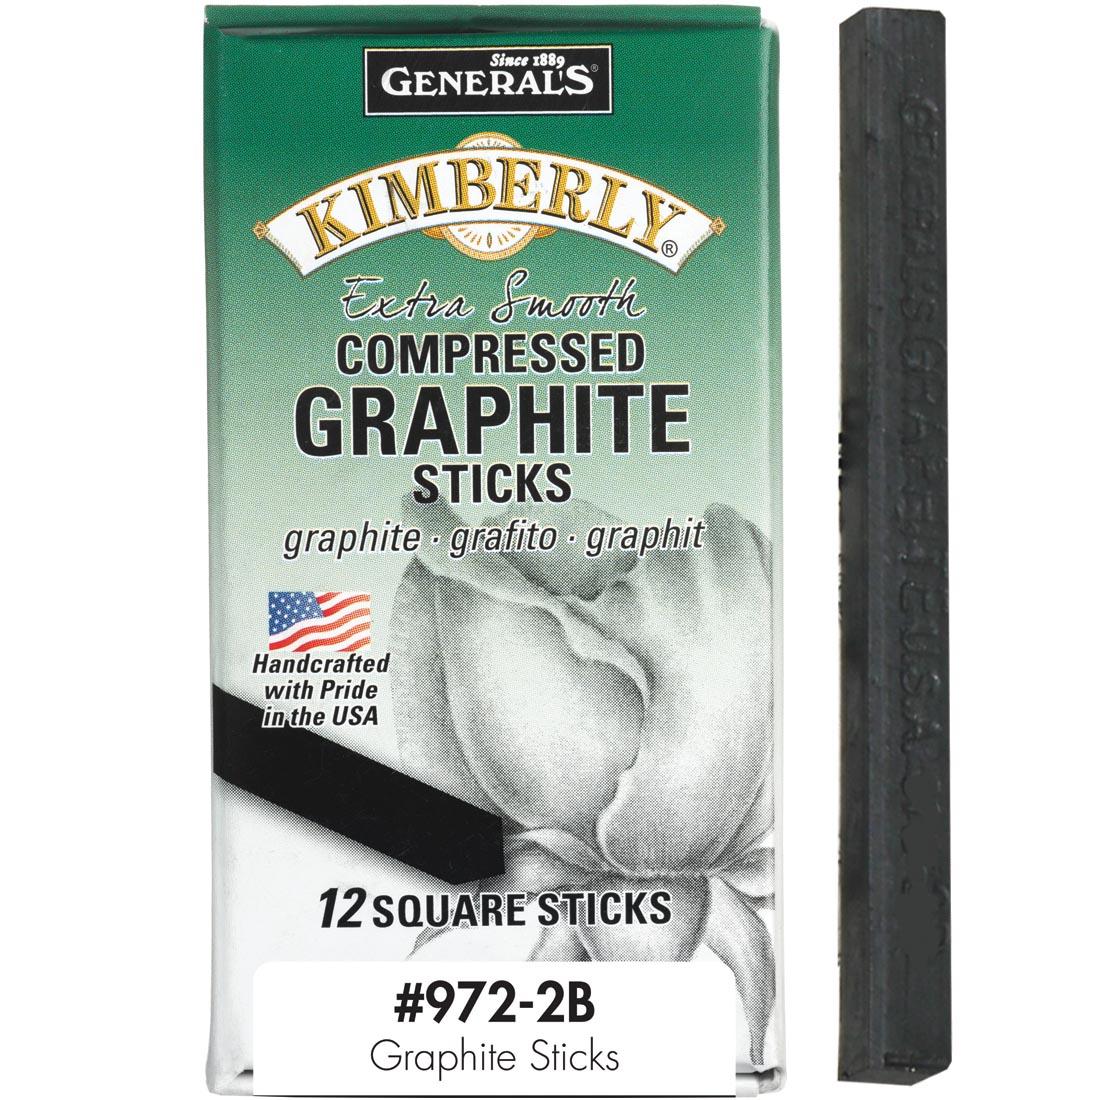 12 Kimberly Compressed Graphite Sticks 2B